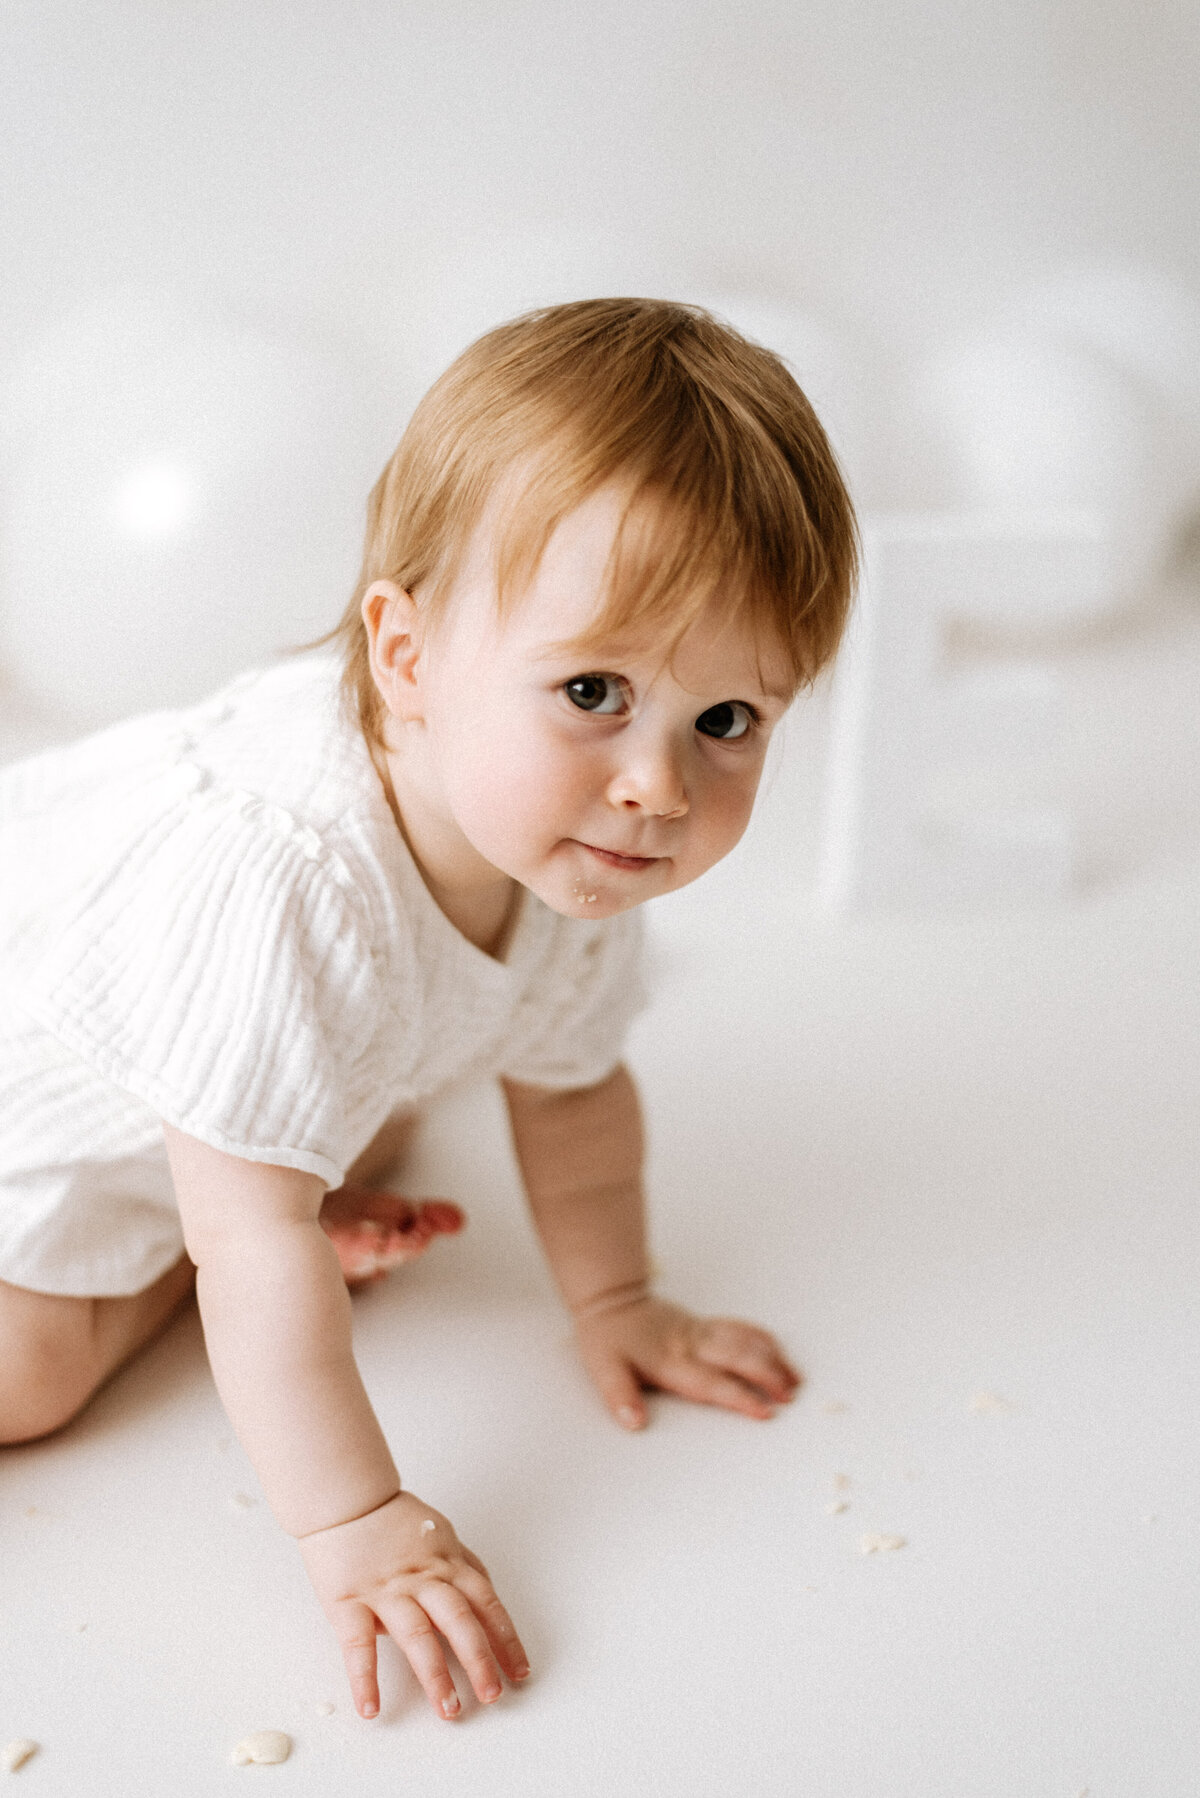 Baby girl crawling and smiling on white floor at Billingshurst cake smash photoshoot